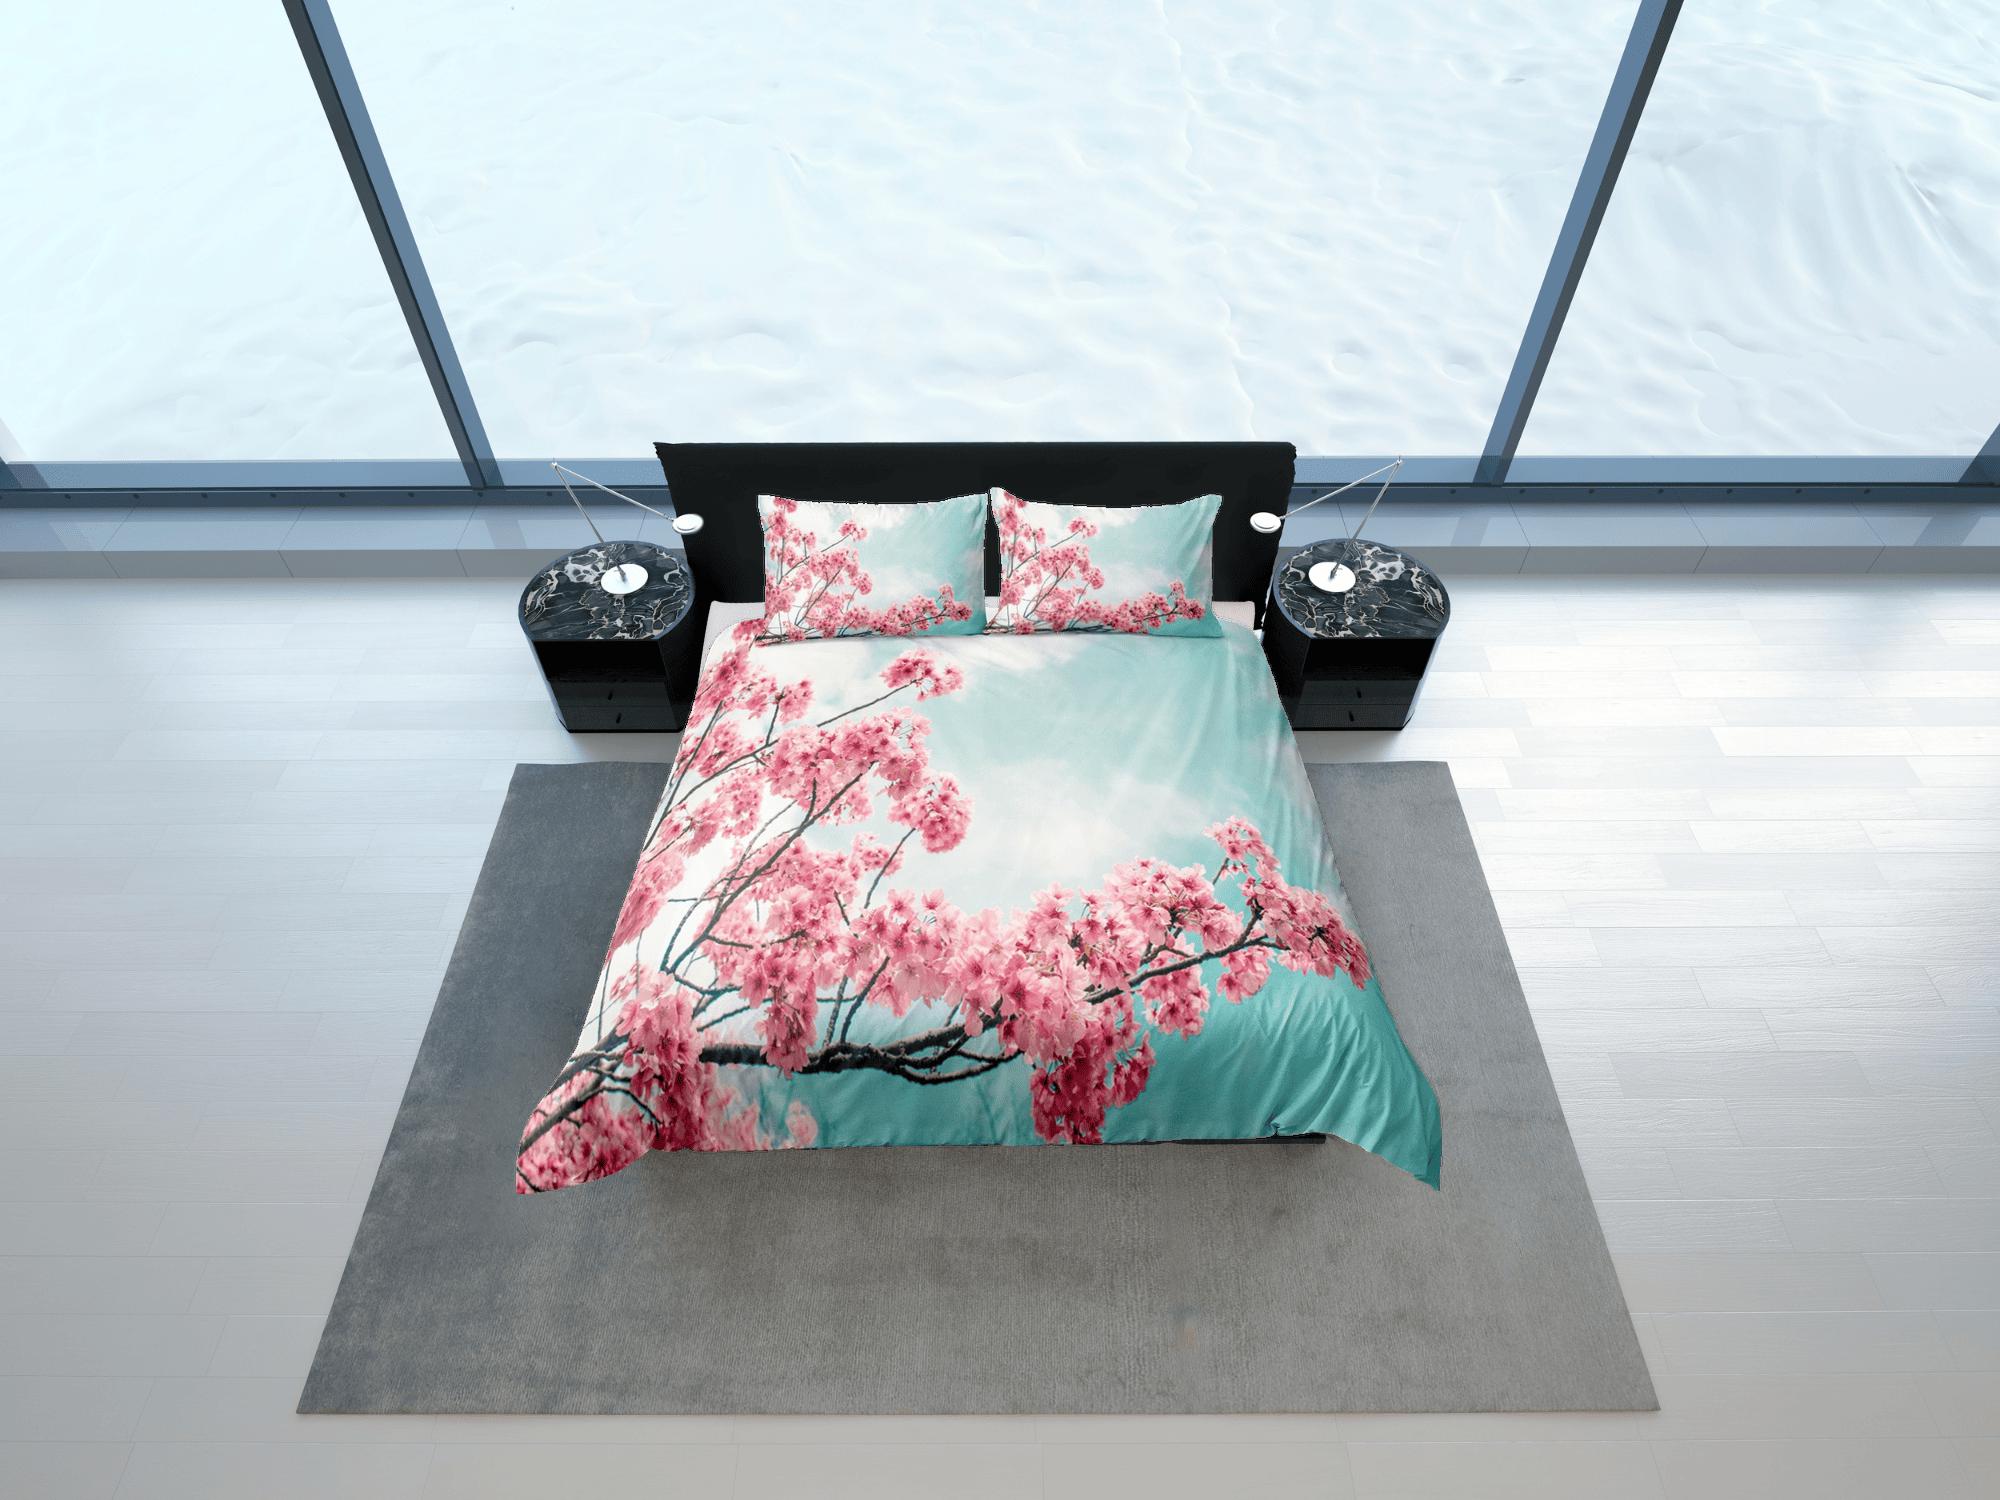 daintyduvet Blue sky pink cherry blossom bedding floral prints duvet cover queen, king, boho bedding designer maximalist full size bedding aesthetic